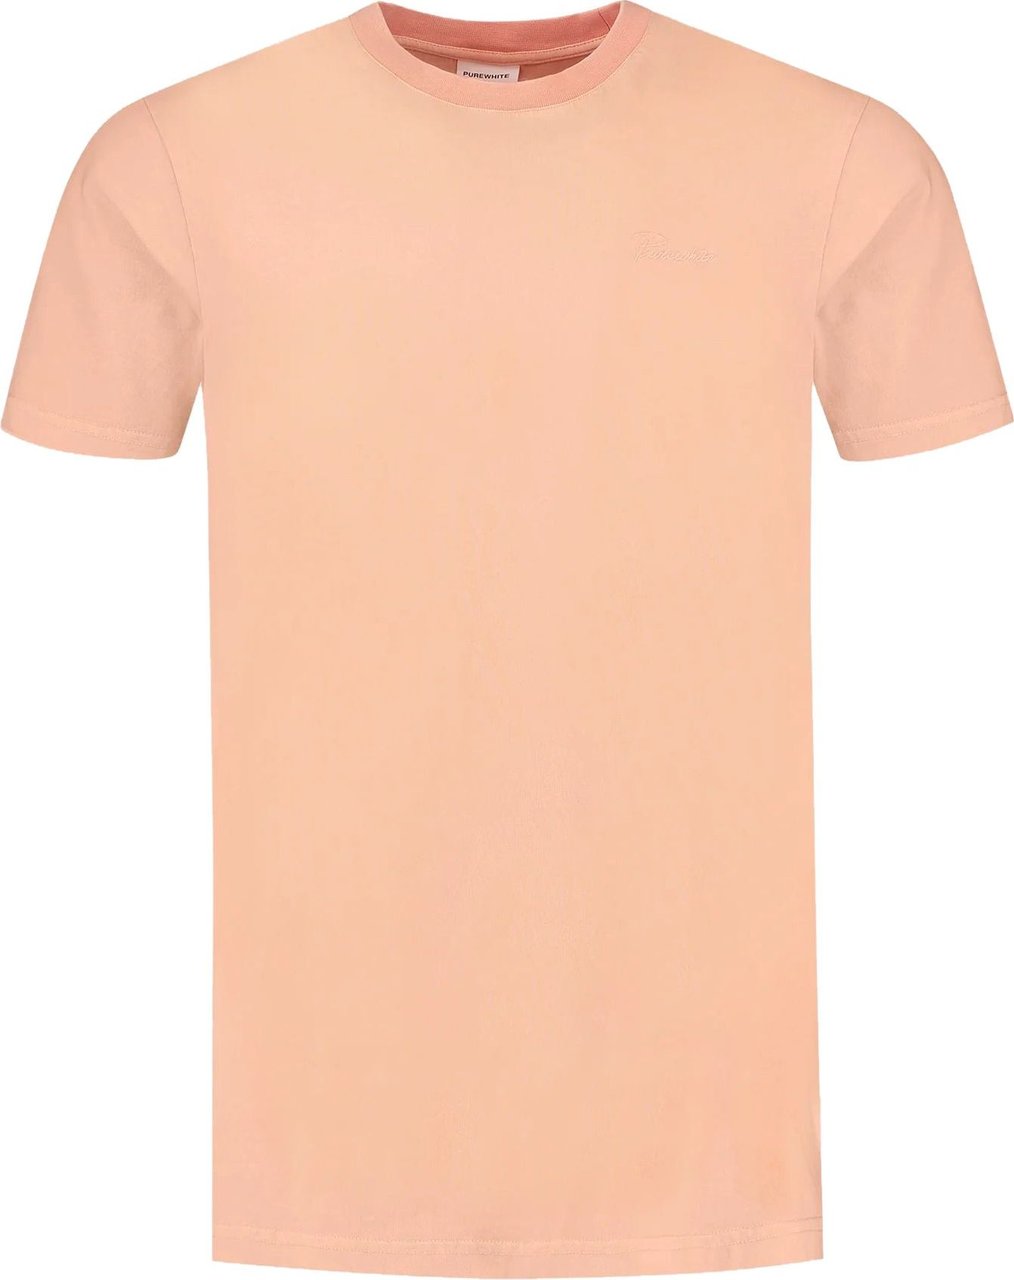 Purewhite Purewhite Garment Dye Faded Script T-Shirt Oranje Oranje